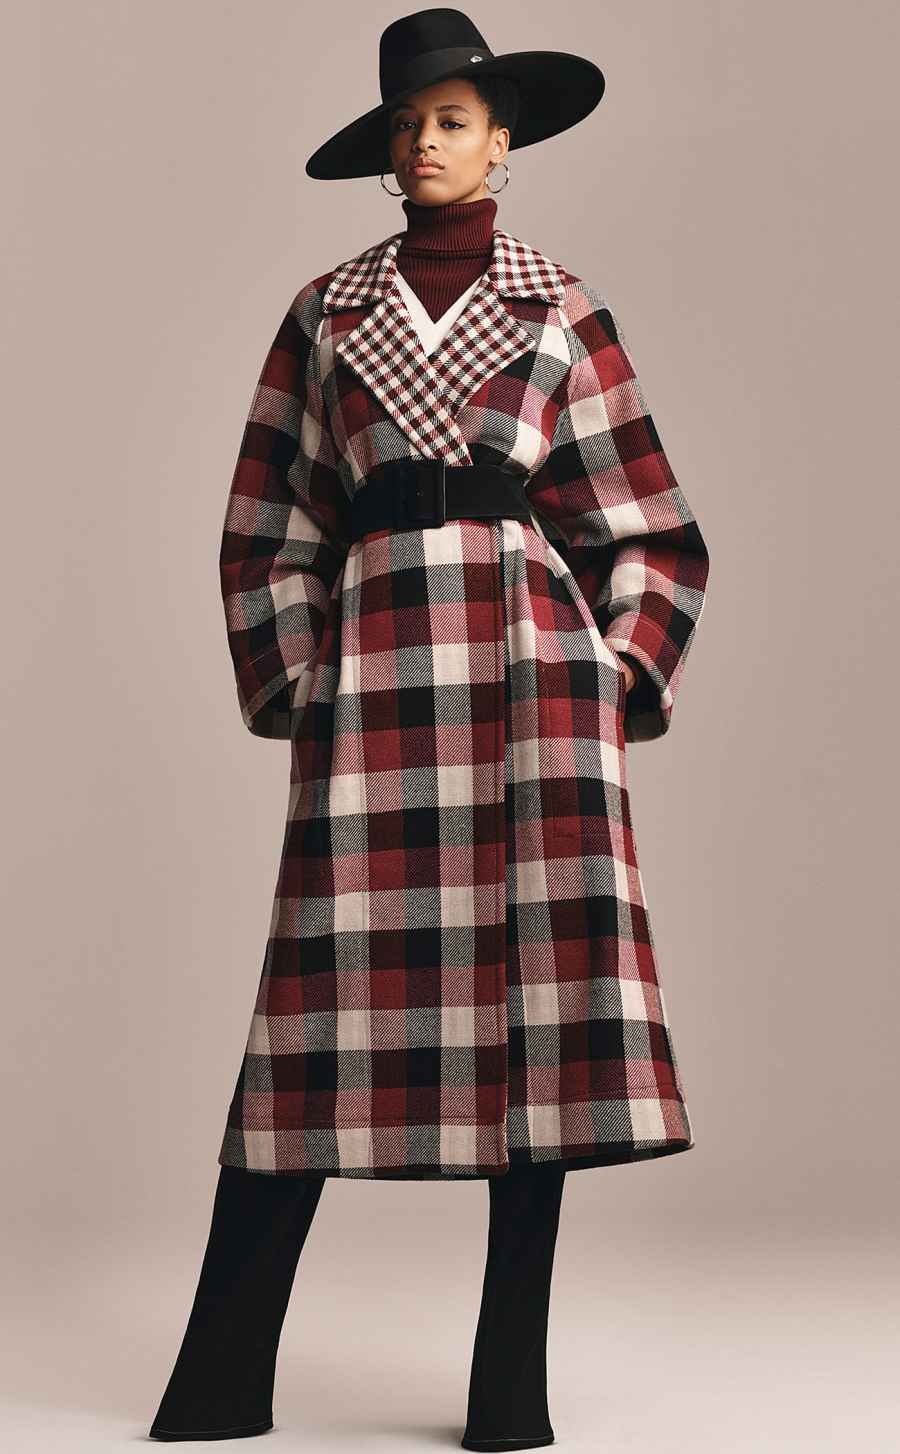 Zendaya x Tommy Hilfiger Collection - Zendaya Check Coat